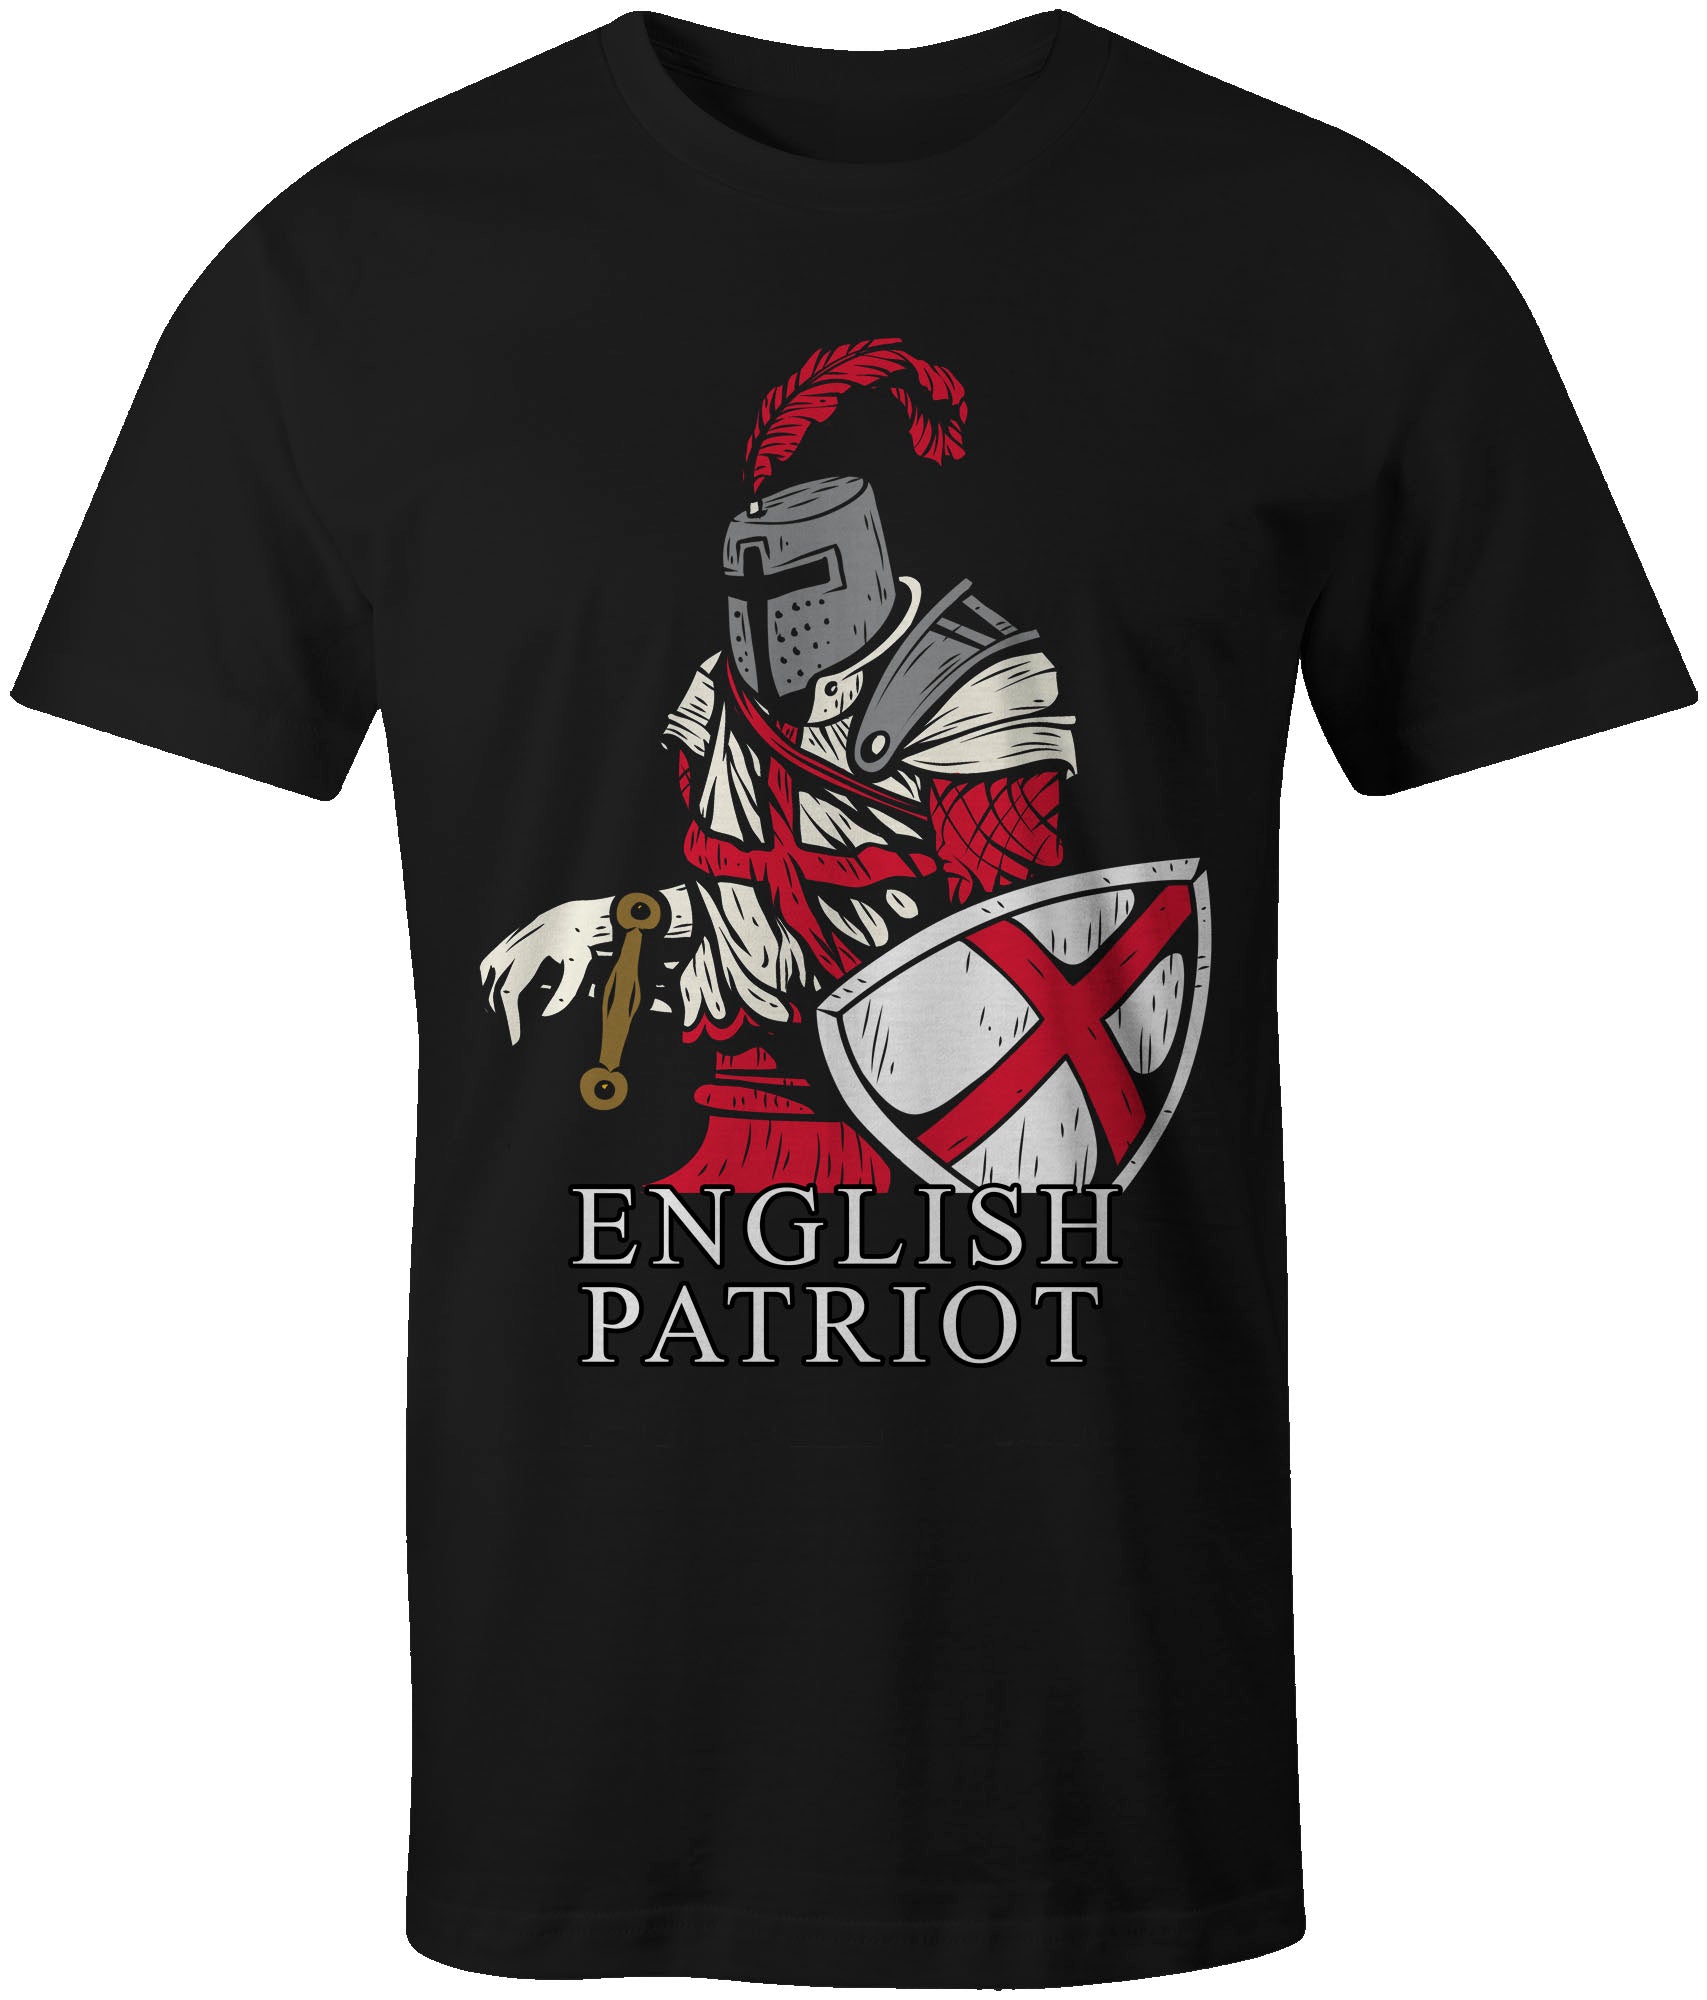 English Patriot T Shirt Ltd Edition